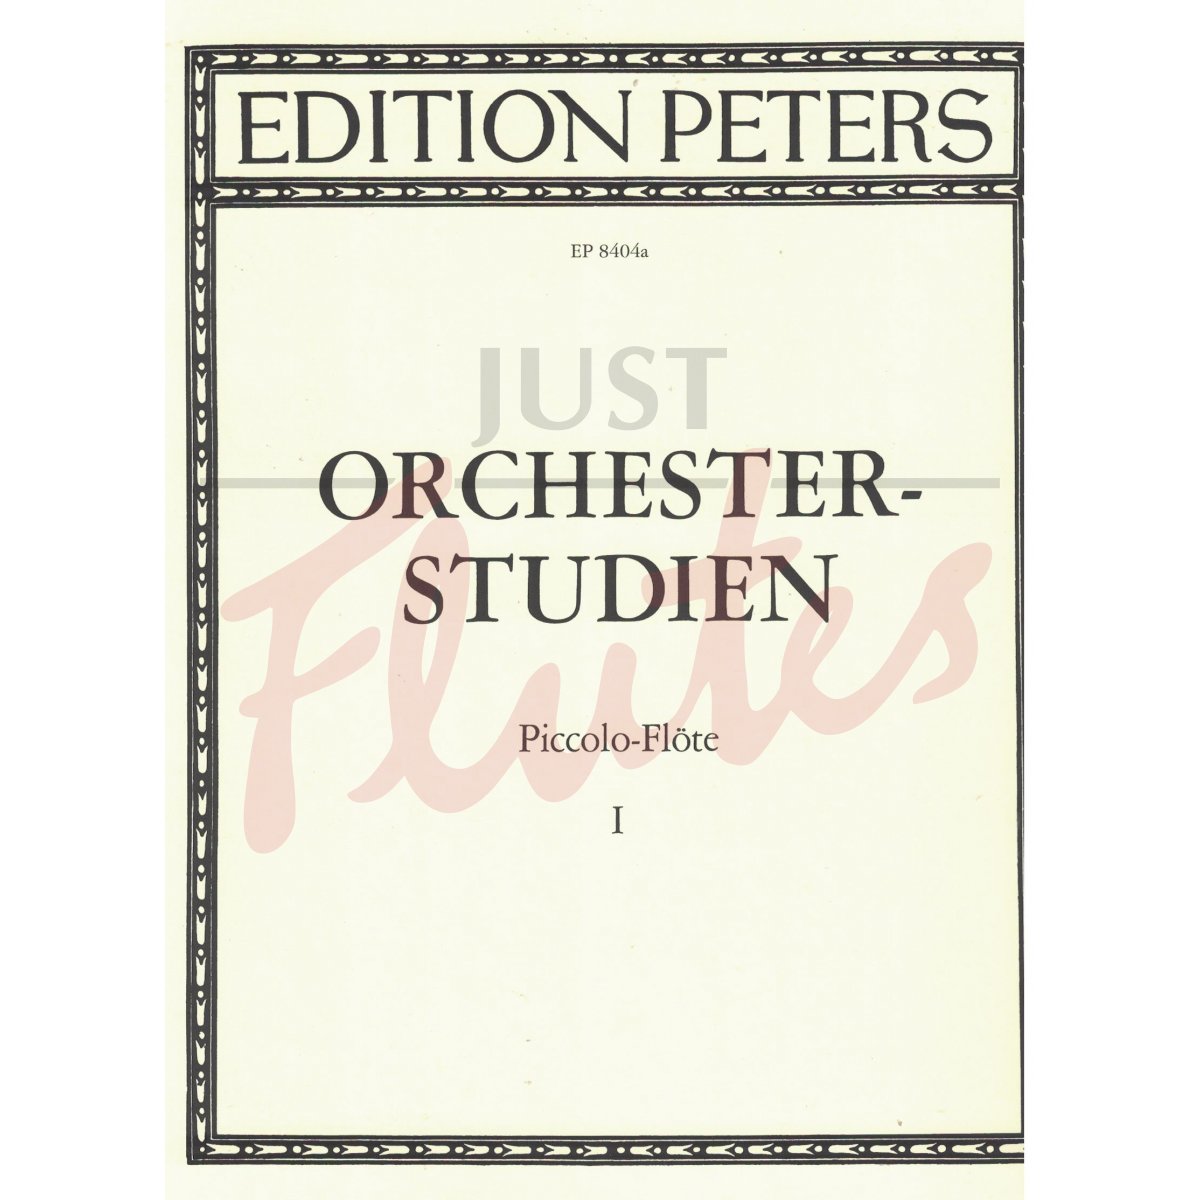 Orchestral Studies for Piccolo Vol 1